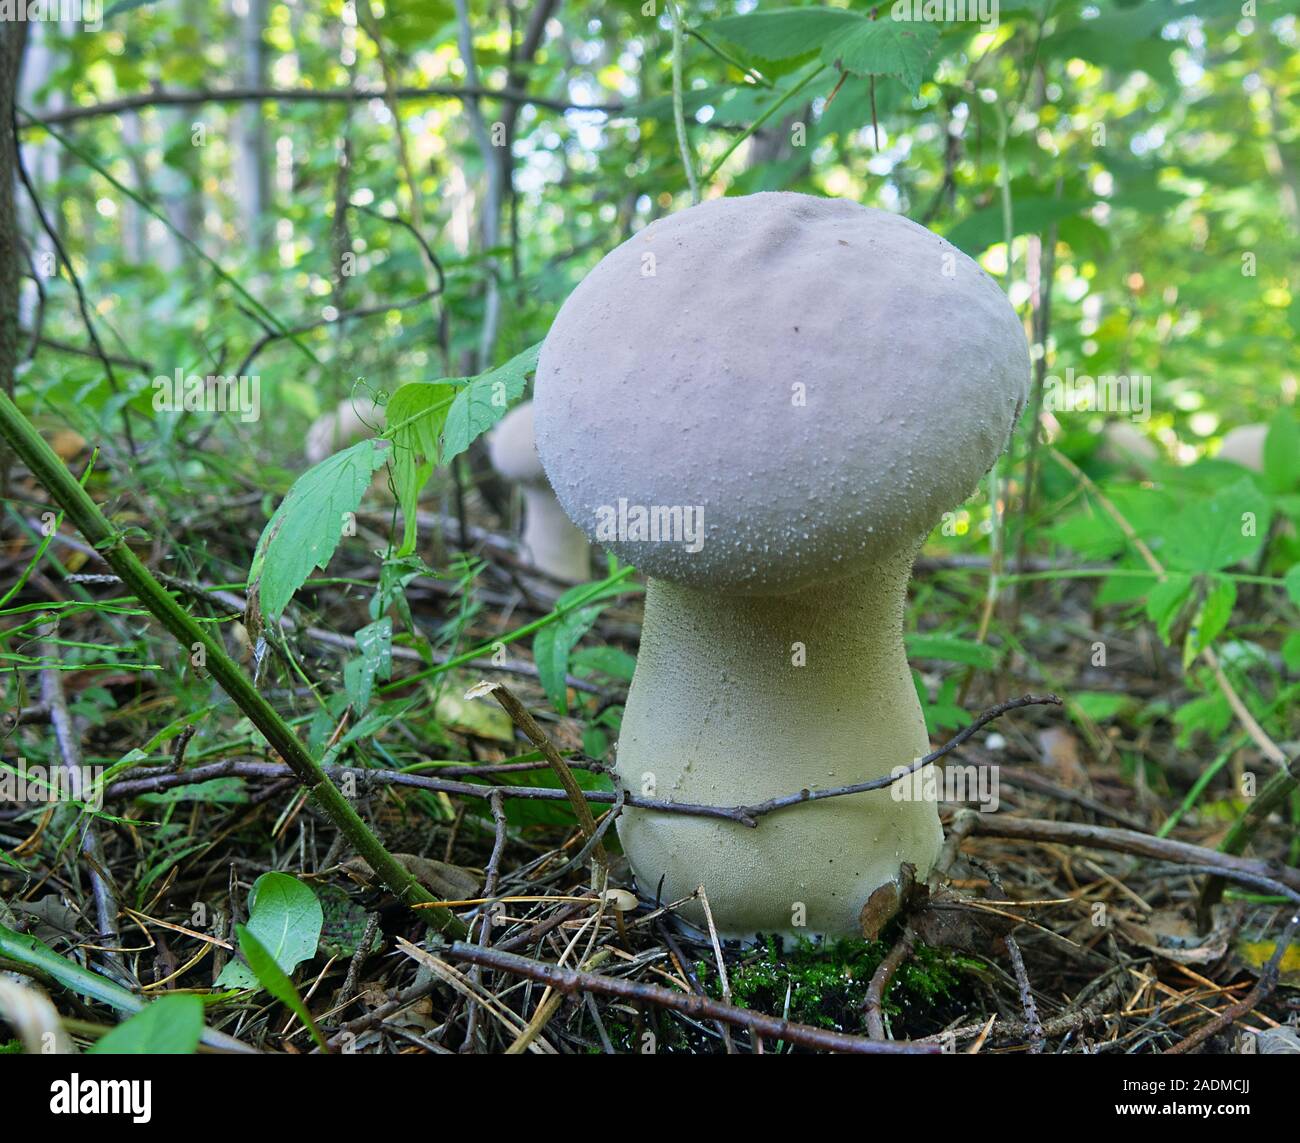 Puffbal (Calvatia excipuliformis, gill fungi (Agaricaceae) Mushroom large size, but young with white flesh, edible fungus Stock Photo